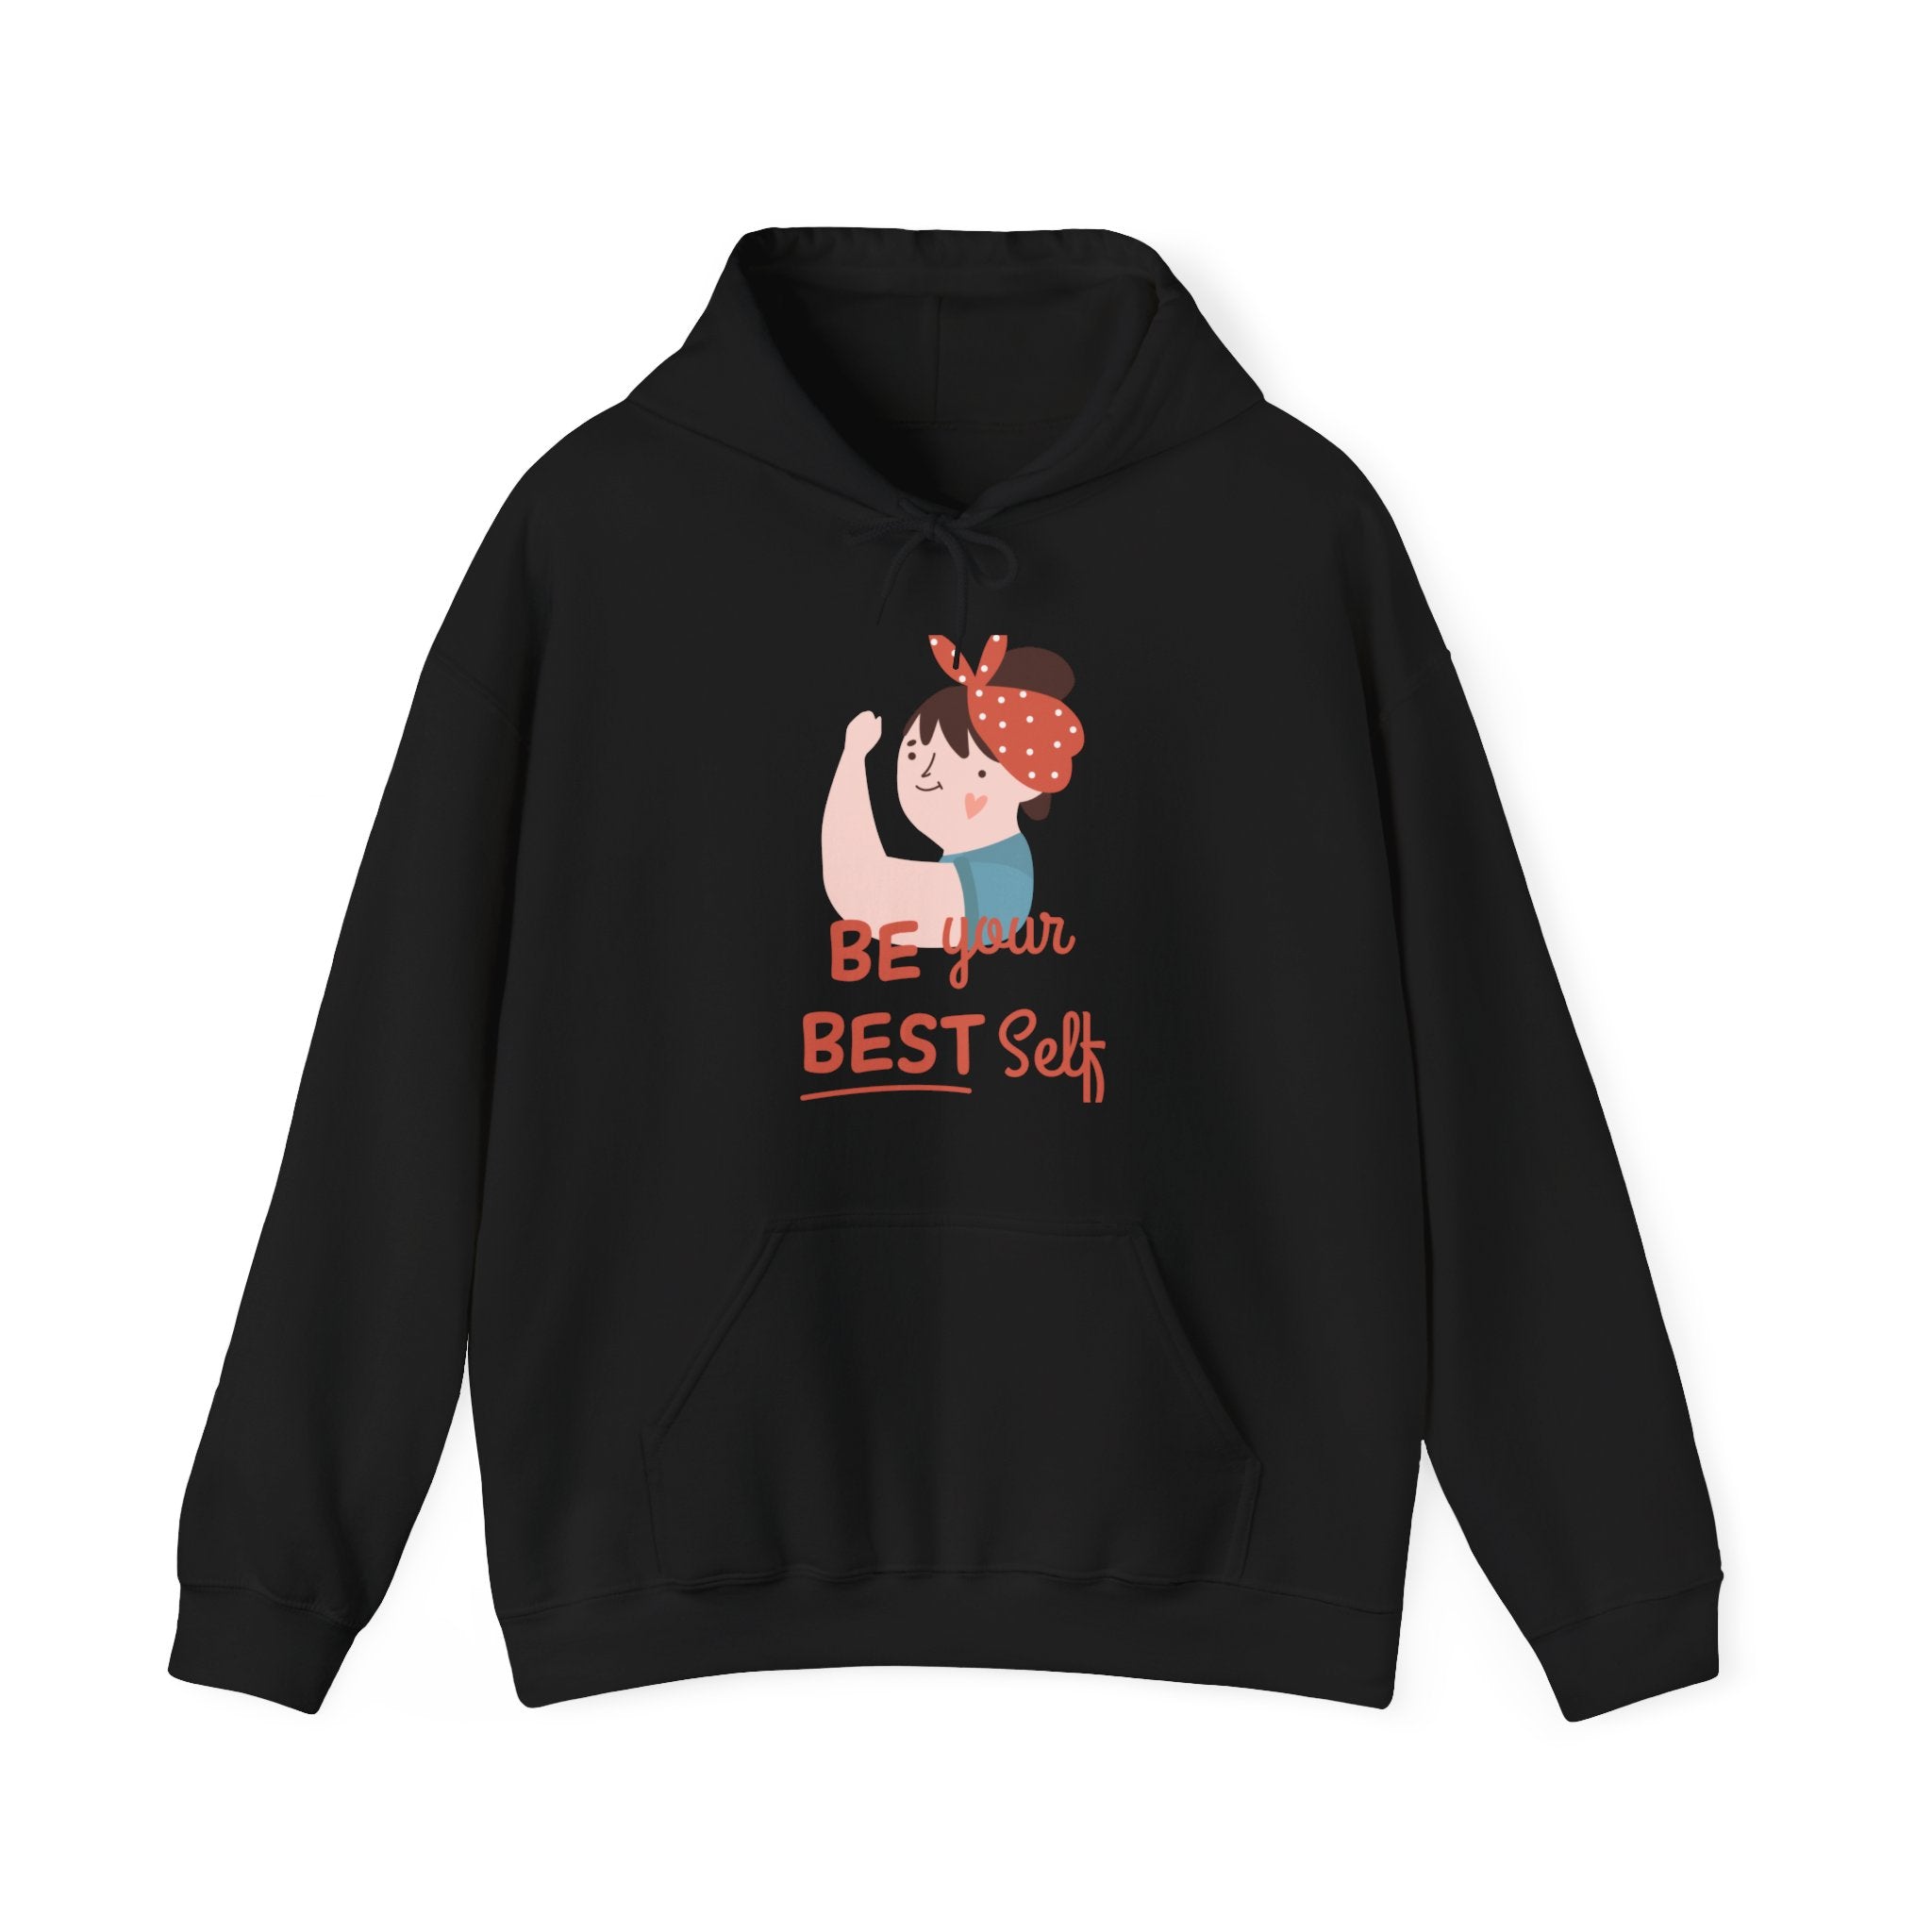 Be Your Best Self - Hooded Sweatshirt